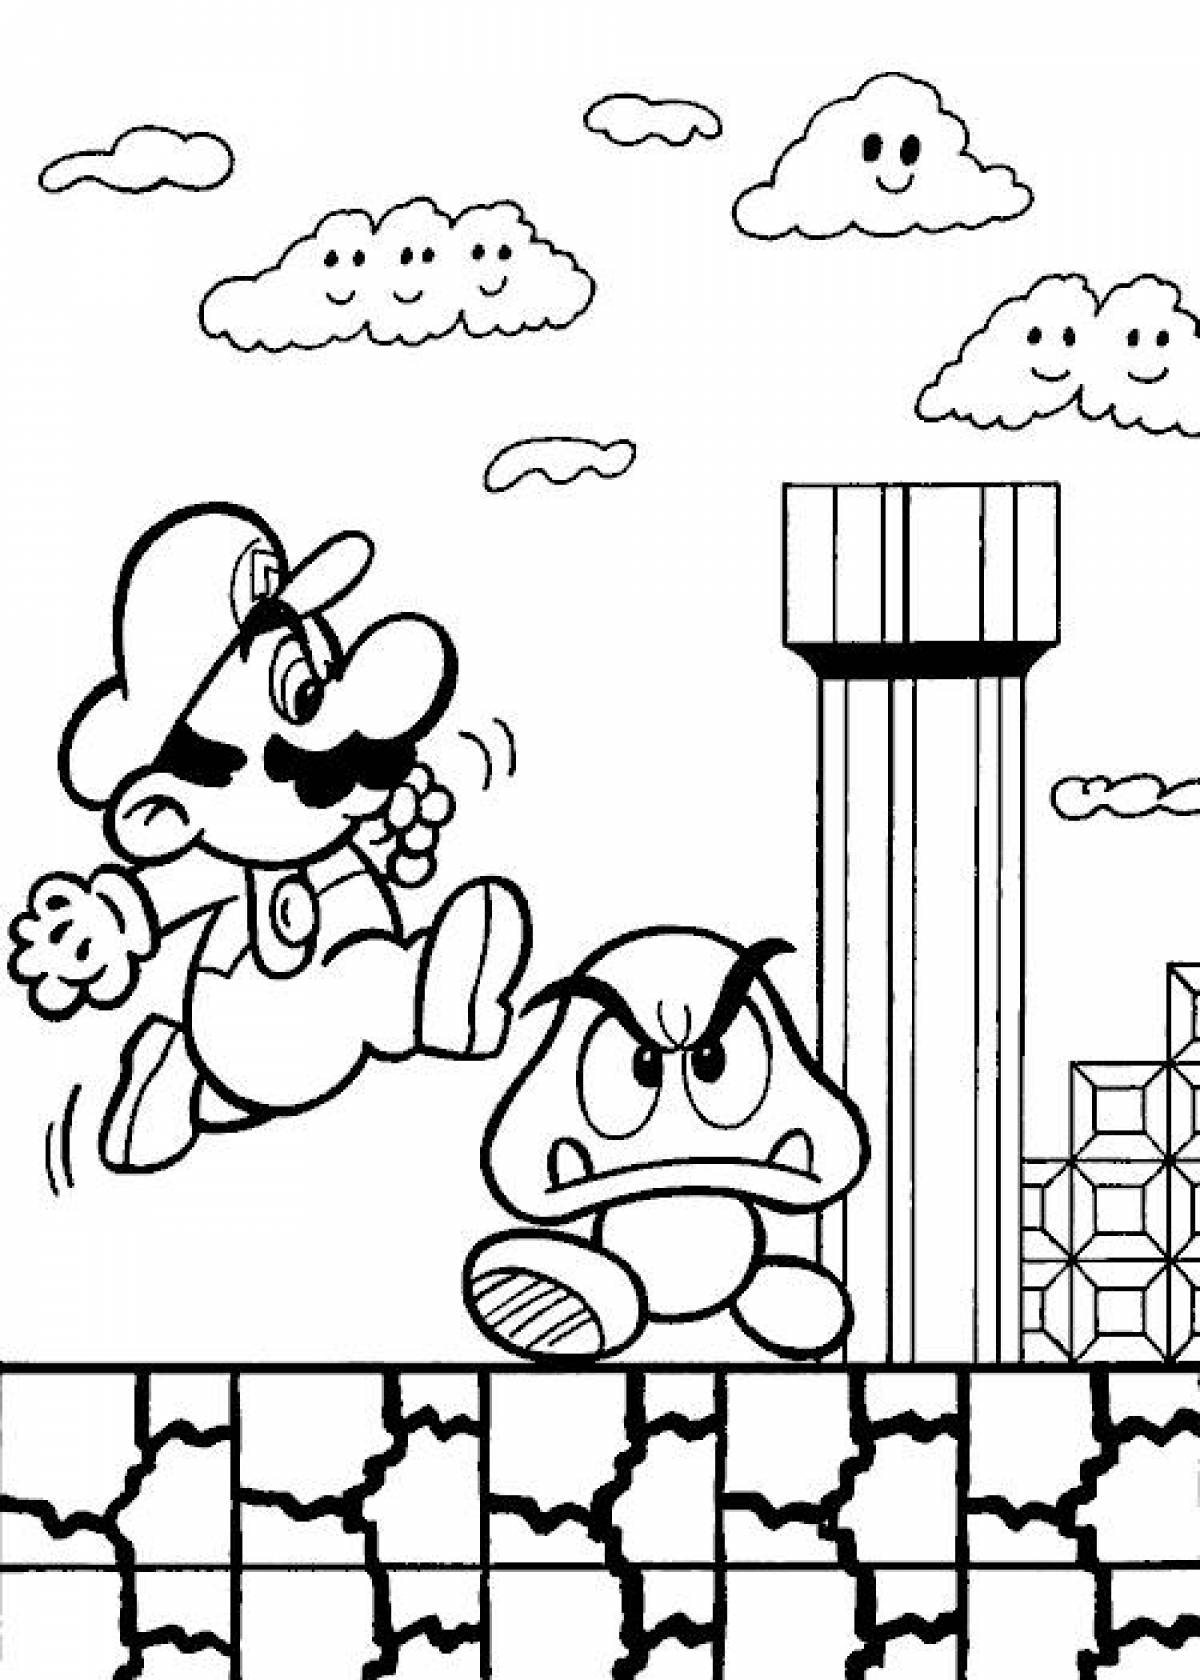 Mario game